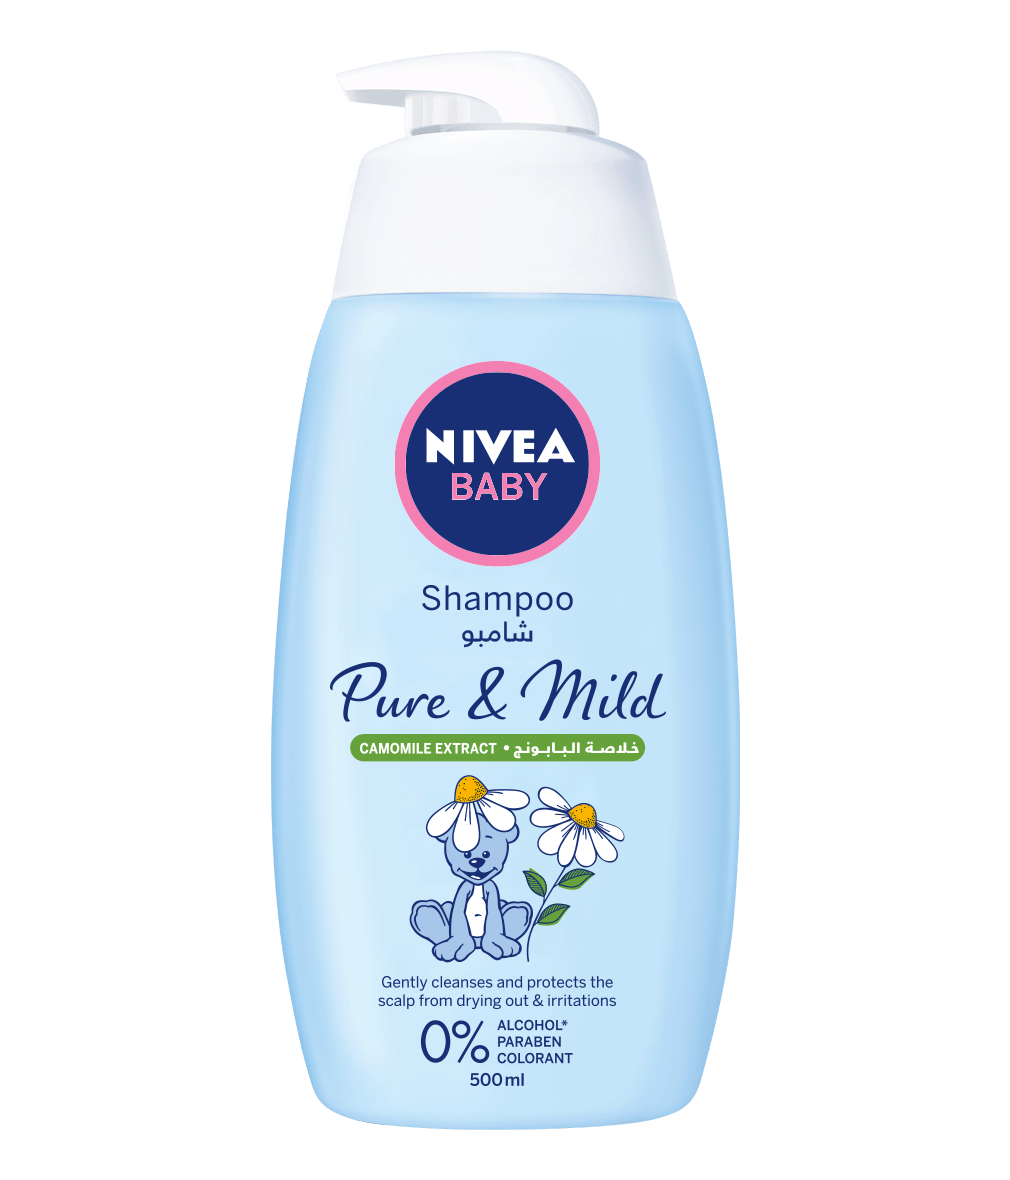 86269 Nivea Baby Pure & Mild Shampoo 500ml clean pack bi-lingual